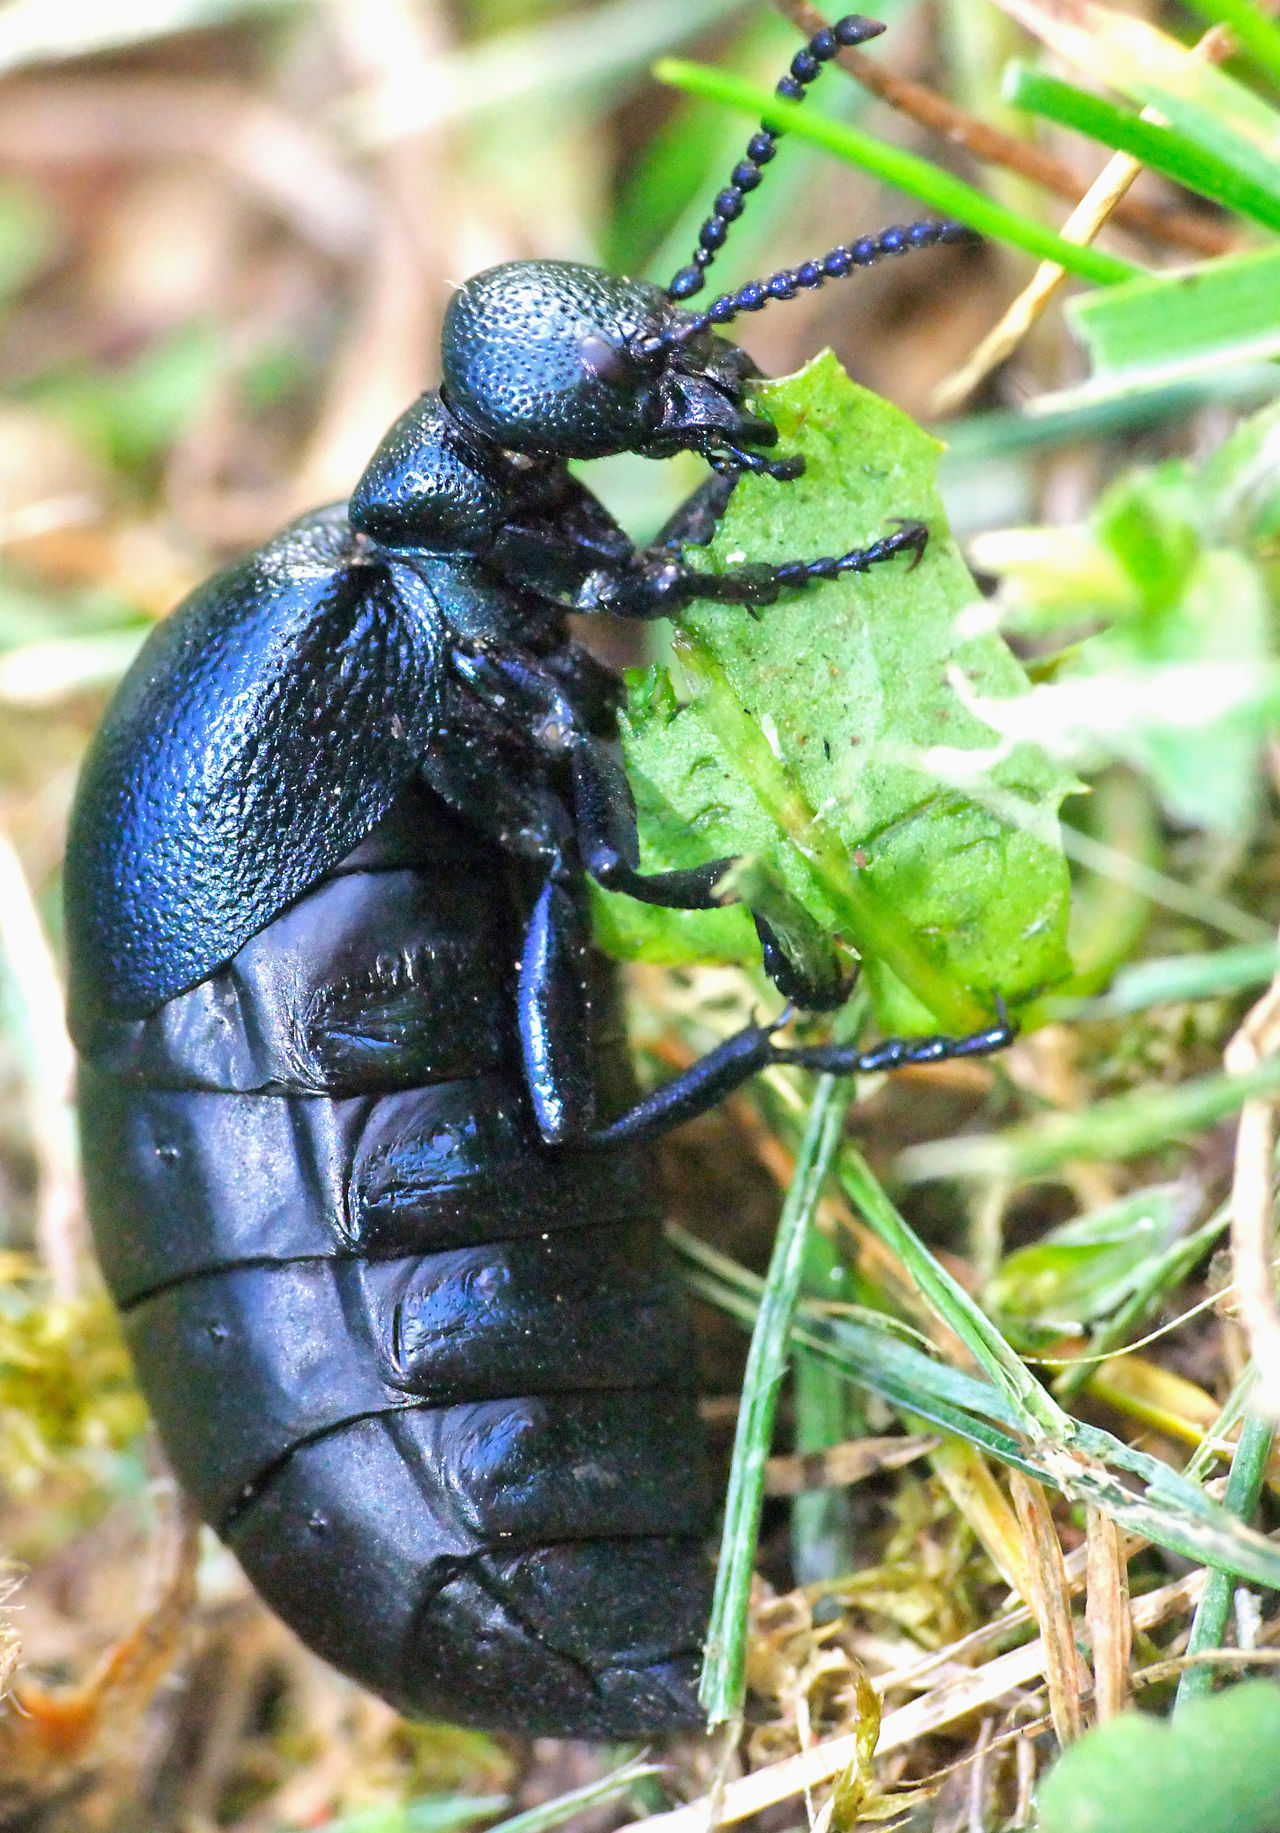 Short-necked oil beetle